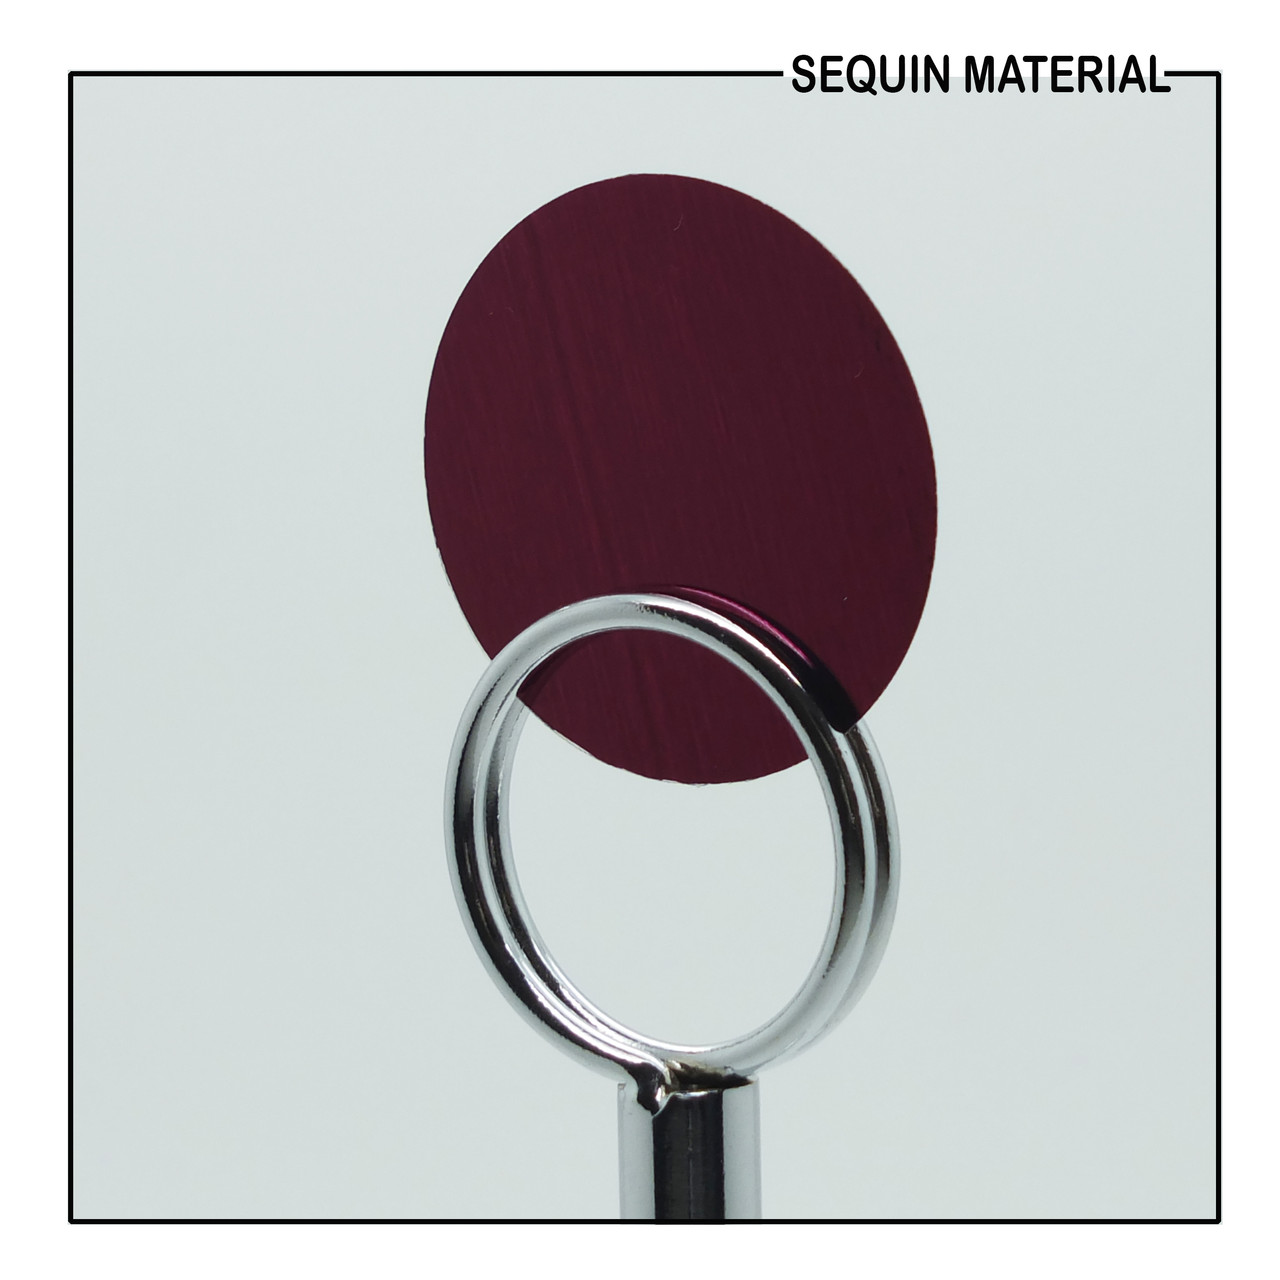 SequinsUSA Burgundy Wine Red Shiny Metallic Sequin Material RK026